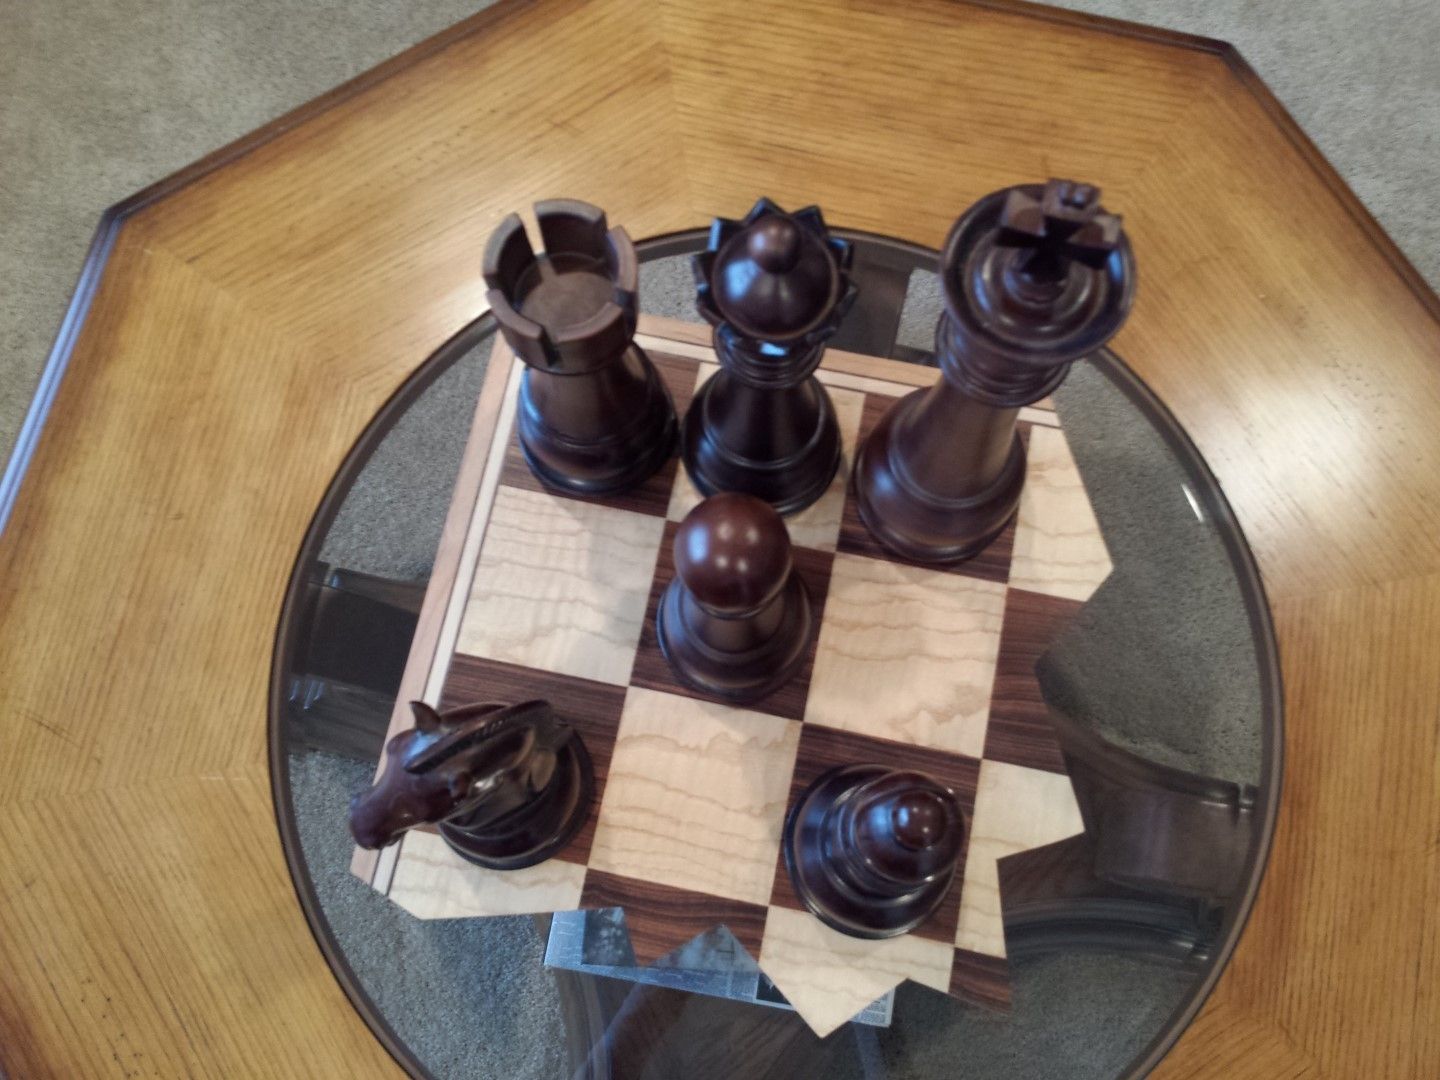 Custom Chess Set and Game Table